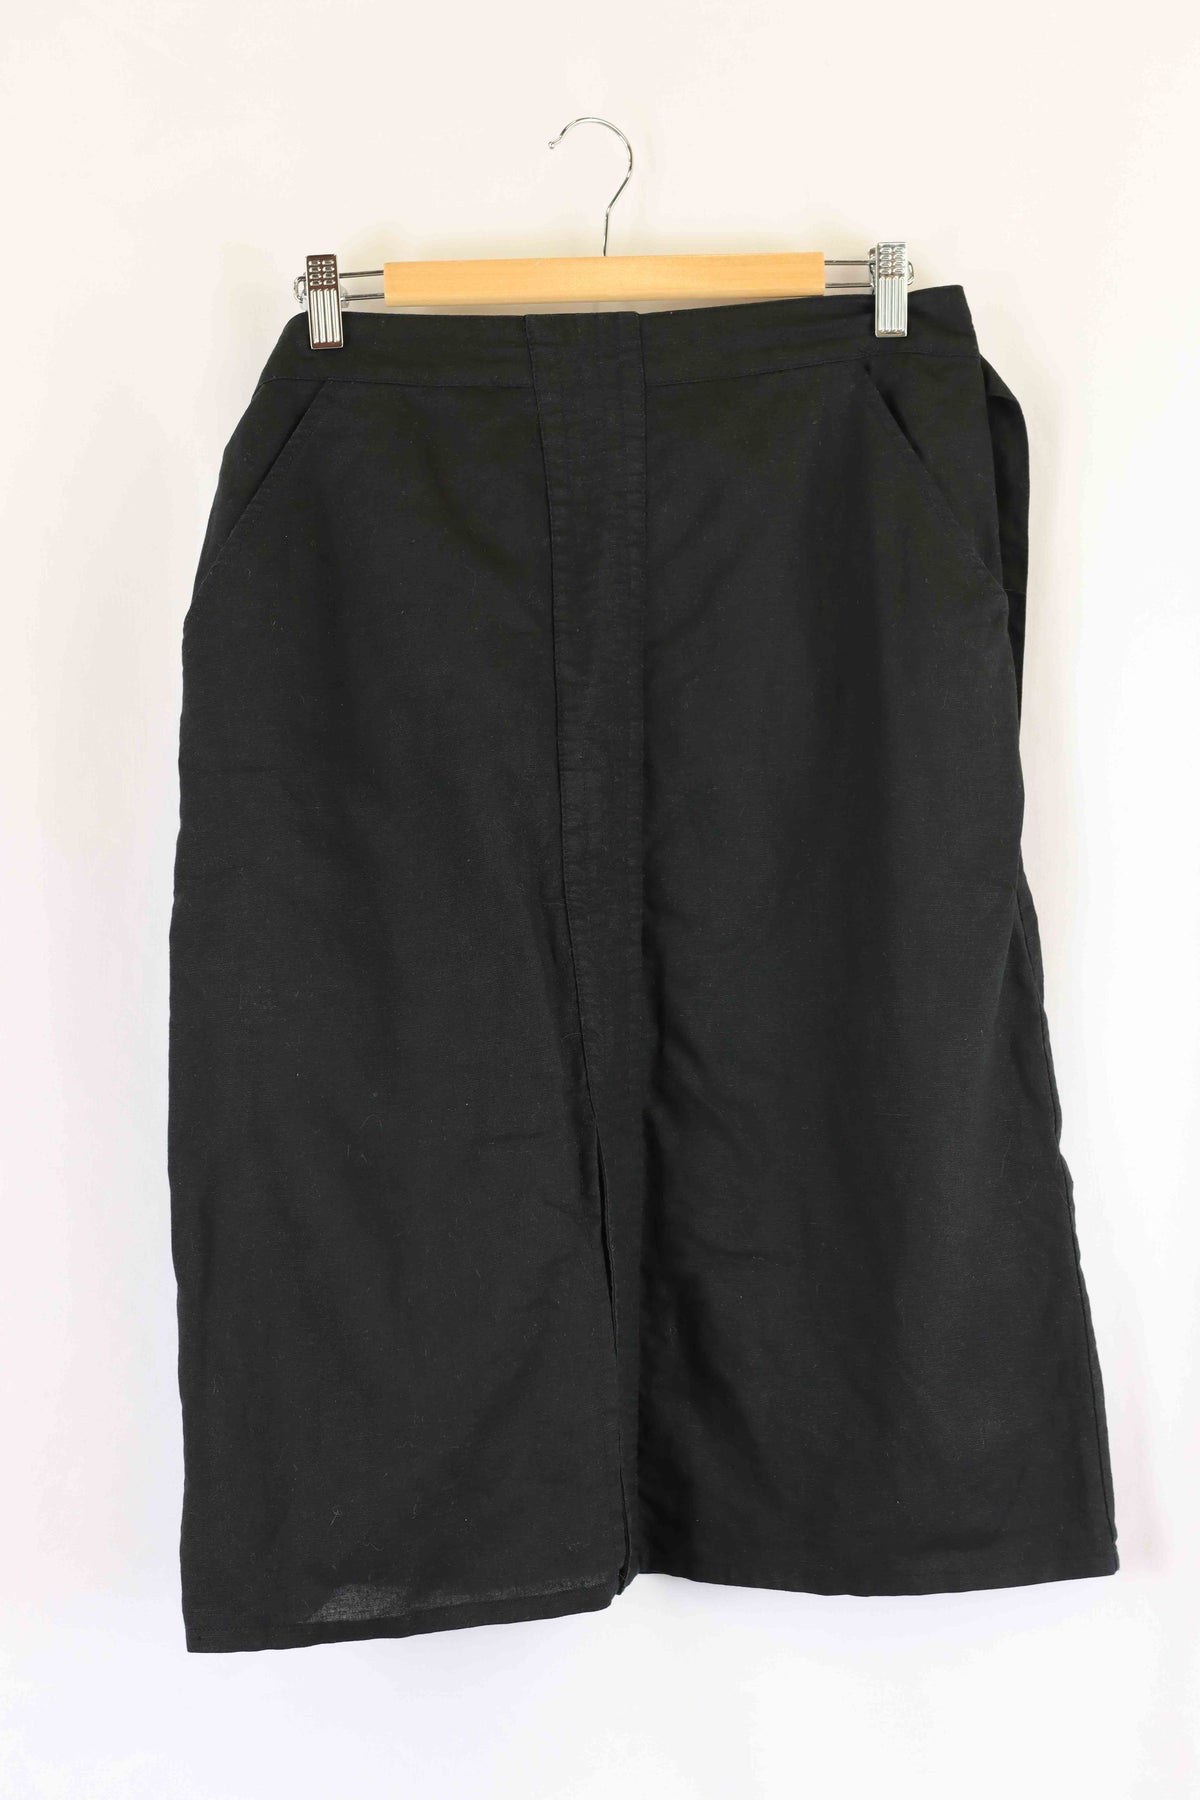 Oxford Womens Black Midi Skirt 12